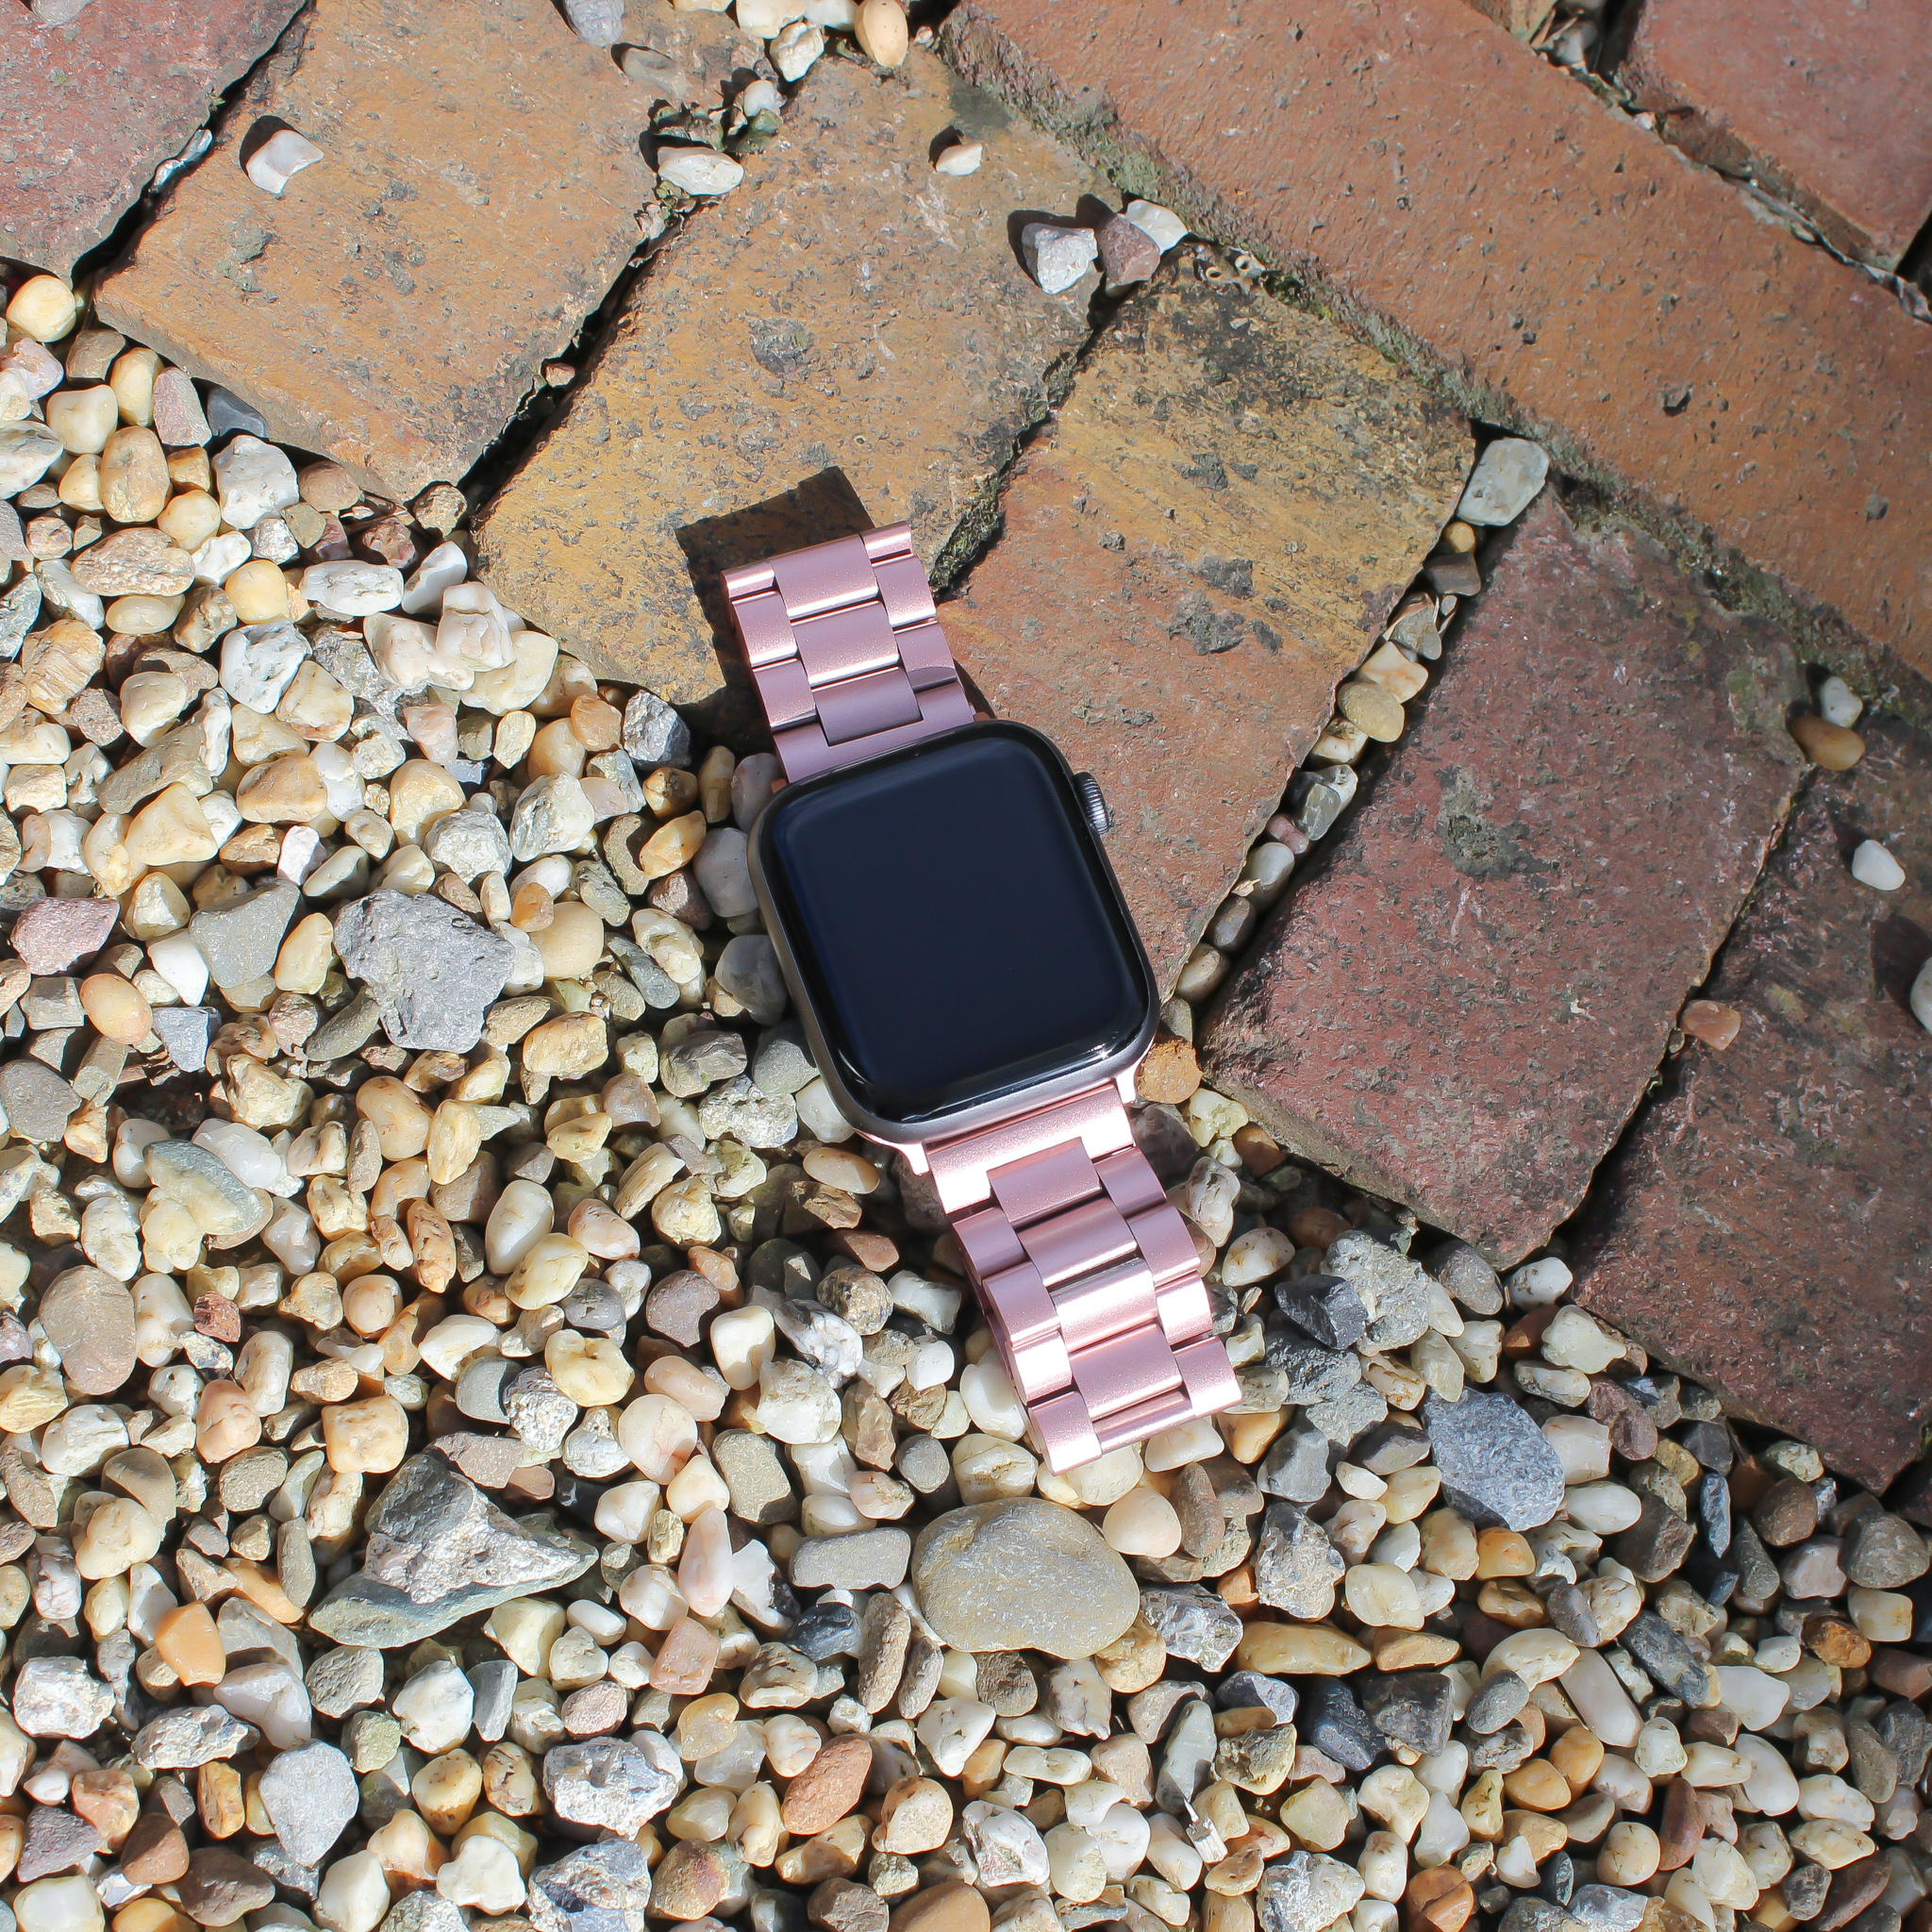 Apple Watch Perlen stahl Gliederarmband - rosa rot